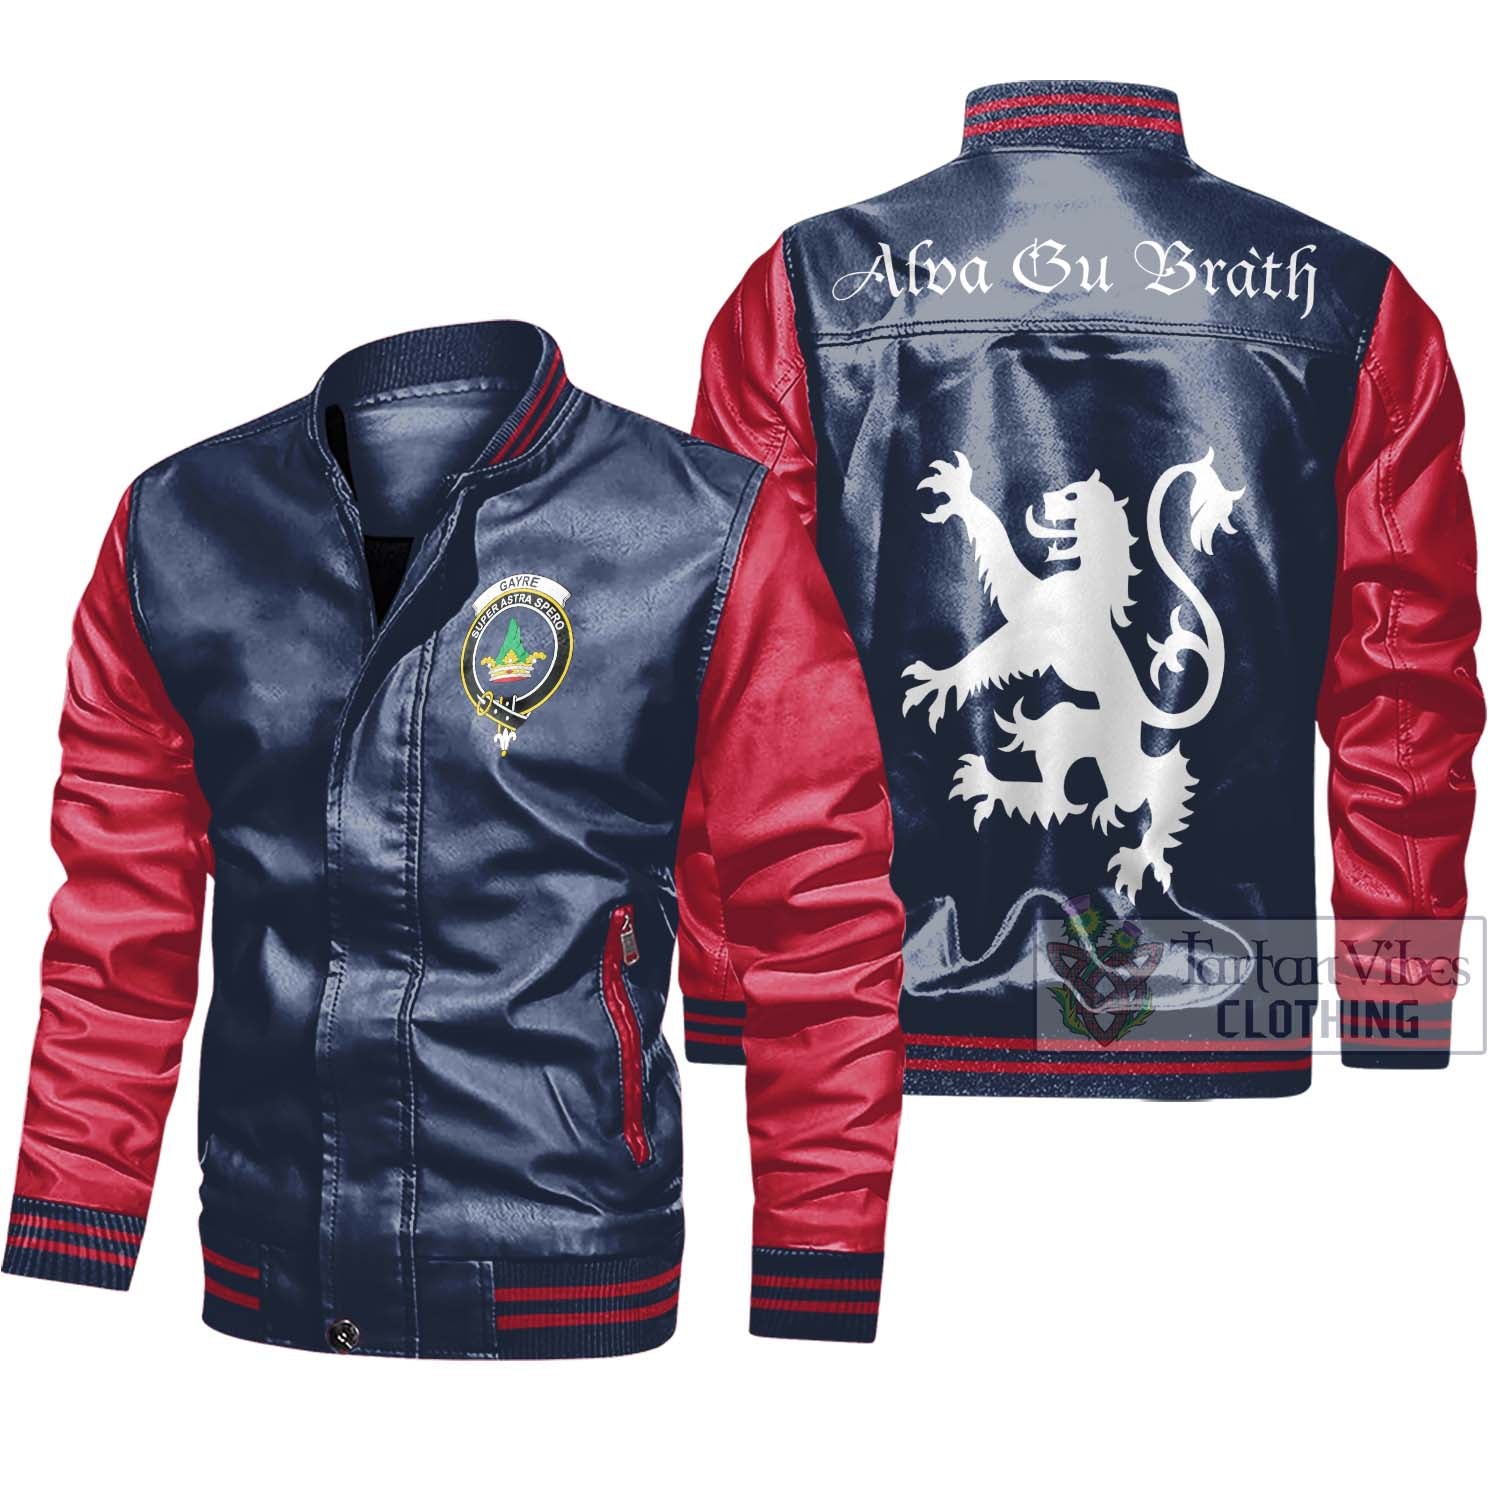 Tartan Vibes Clothing Gayre Family Crest Leather Bomber Jacket Lion Rampant Alba Gu Brath Style